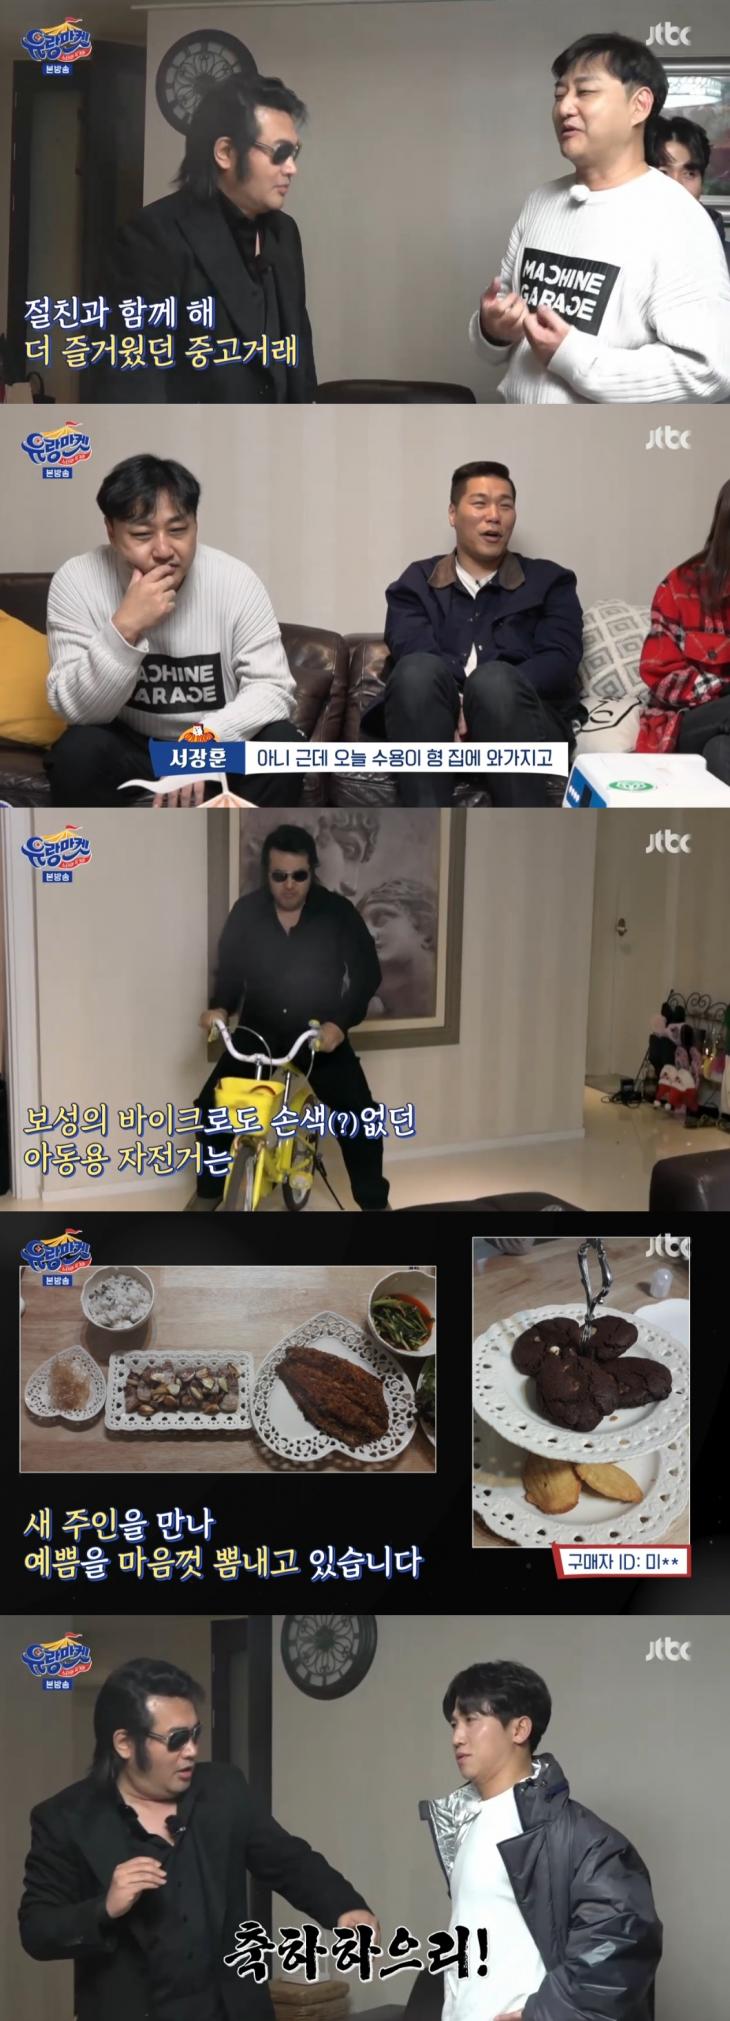 JTBC 예능프로그램 '유랑마켓'